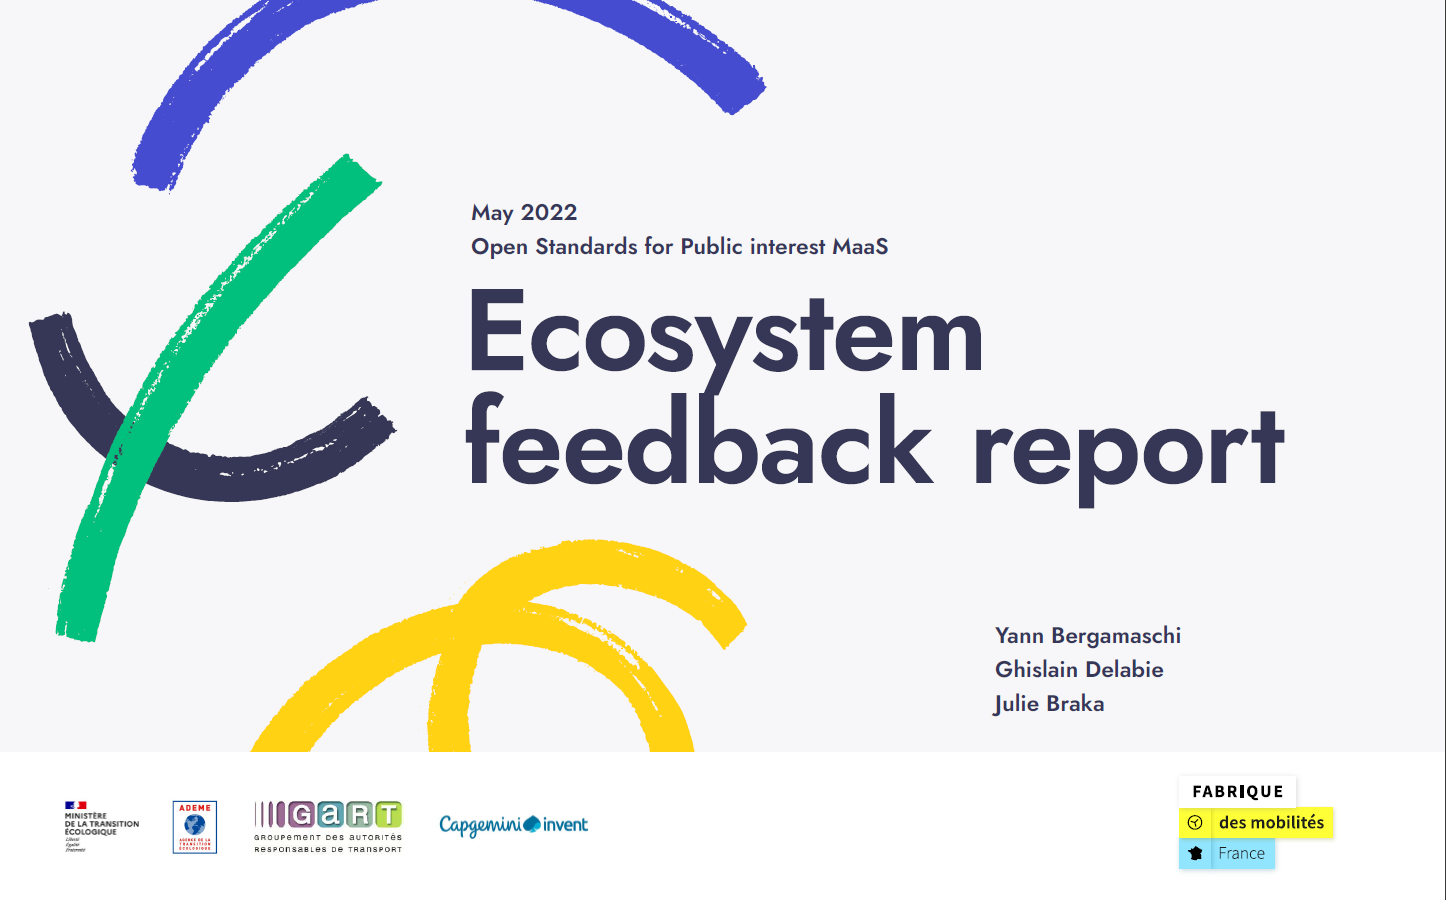 Image ecosystem maas feedback report.png